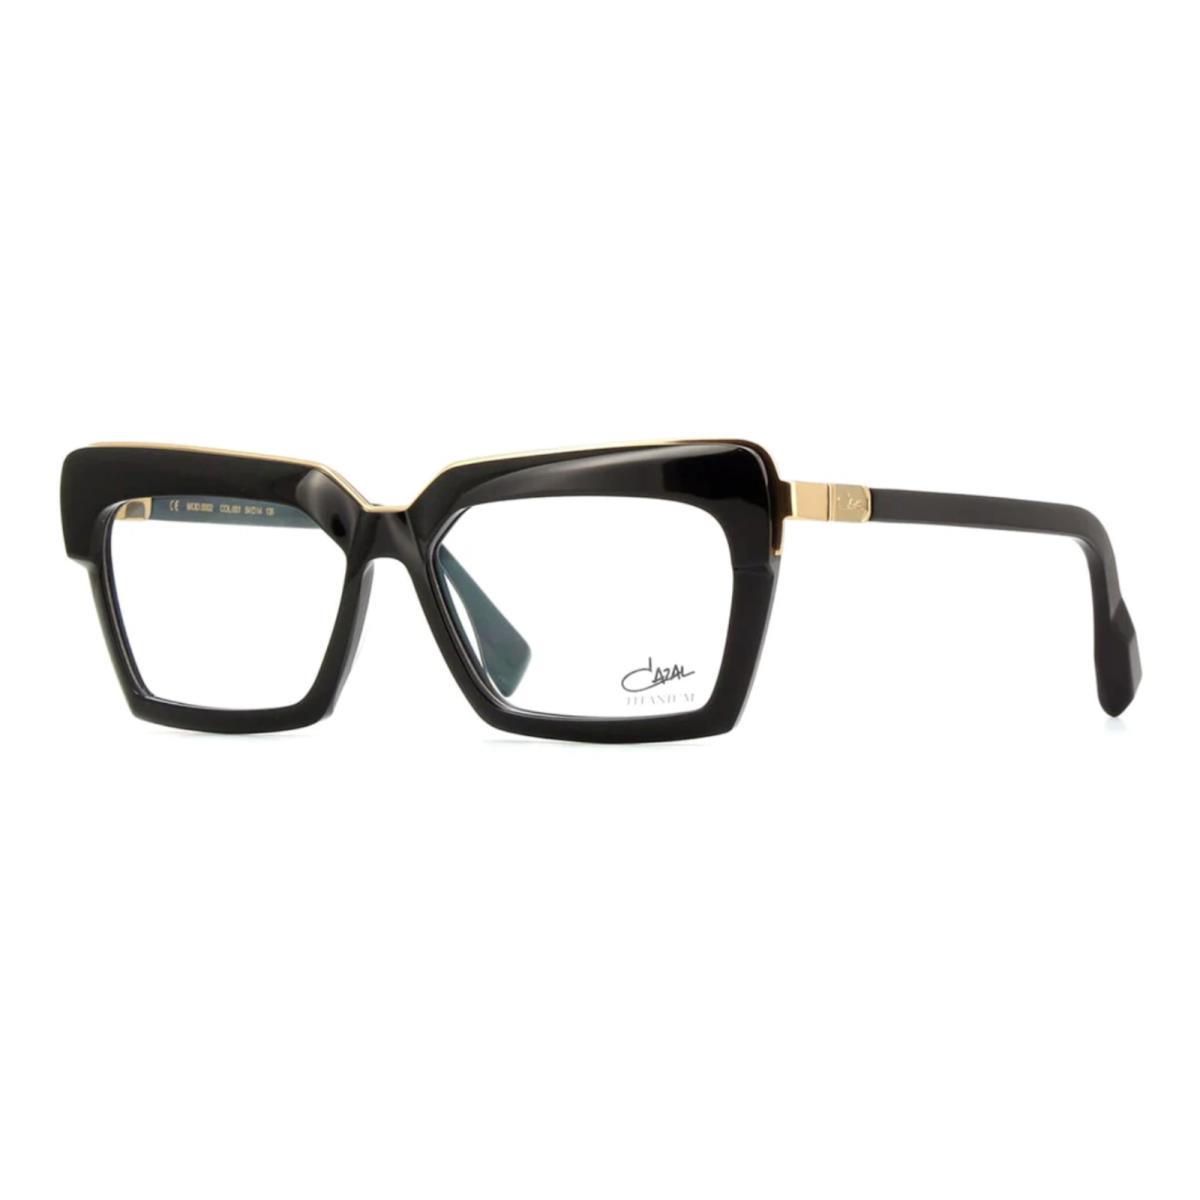 Cazal Mod. 5002 Eyeglasses Col. 001 Black-gold Size 54